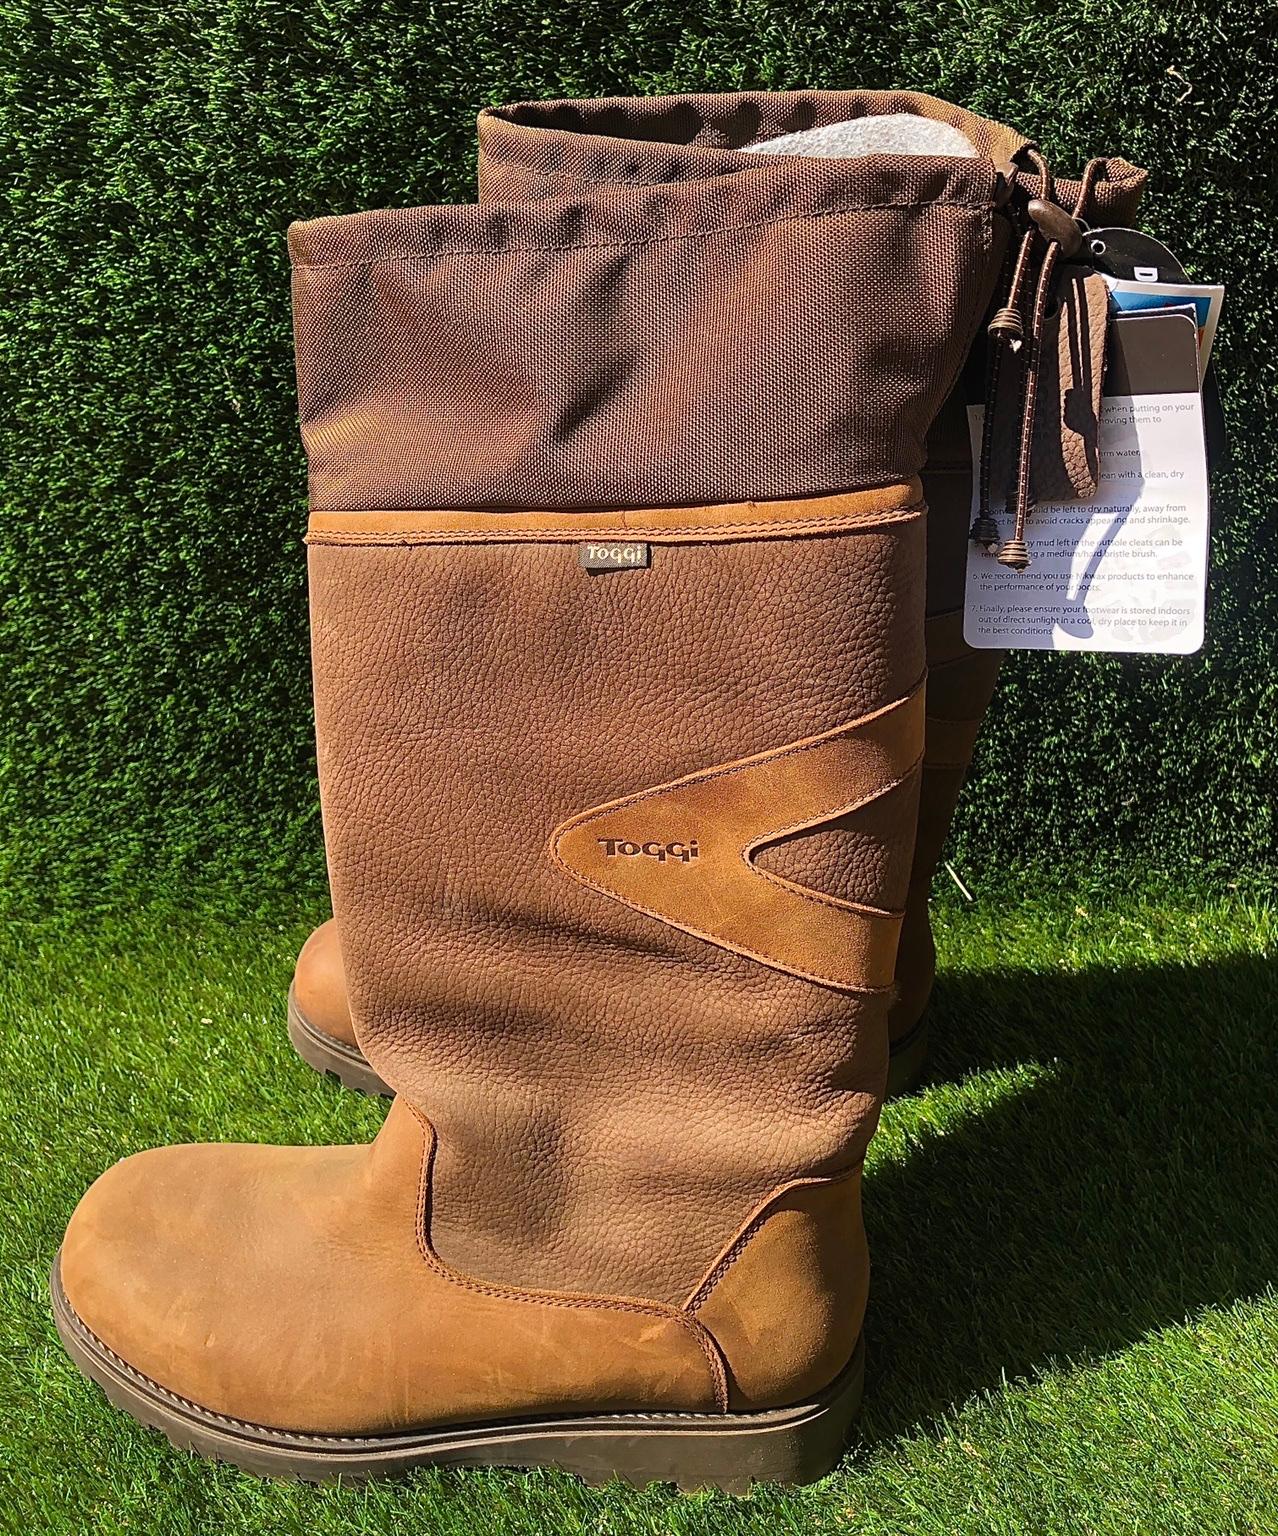 Toggi COLUMBUS Waterproof Country Boots Dark Copper Sizes 4-13 